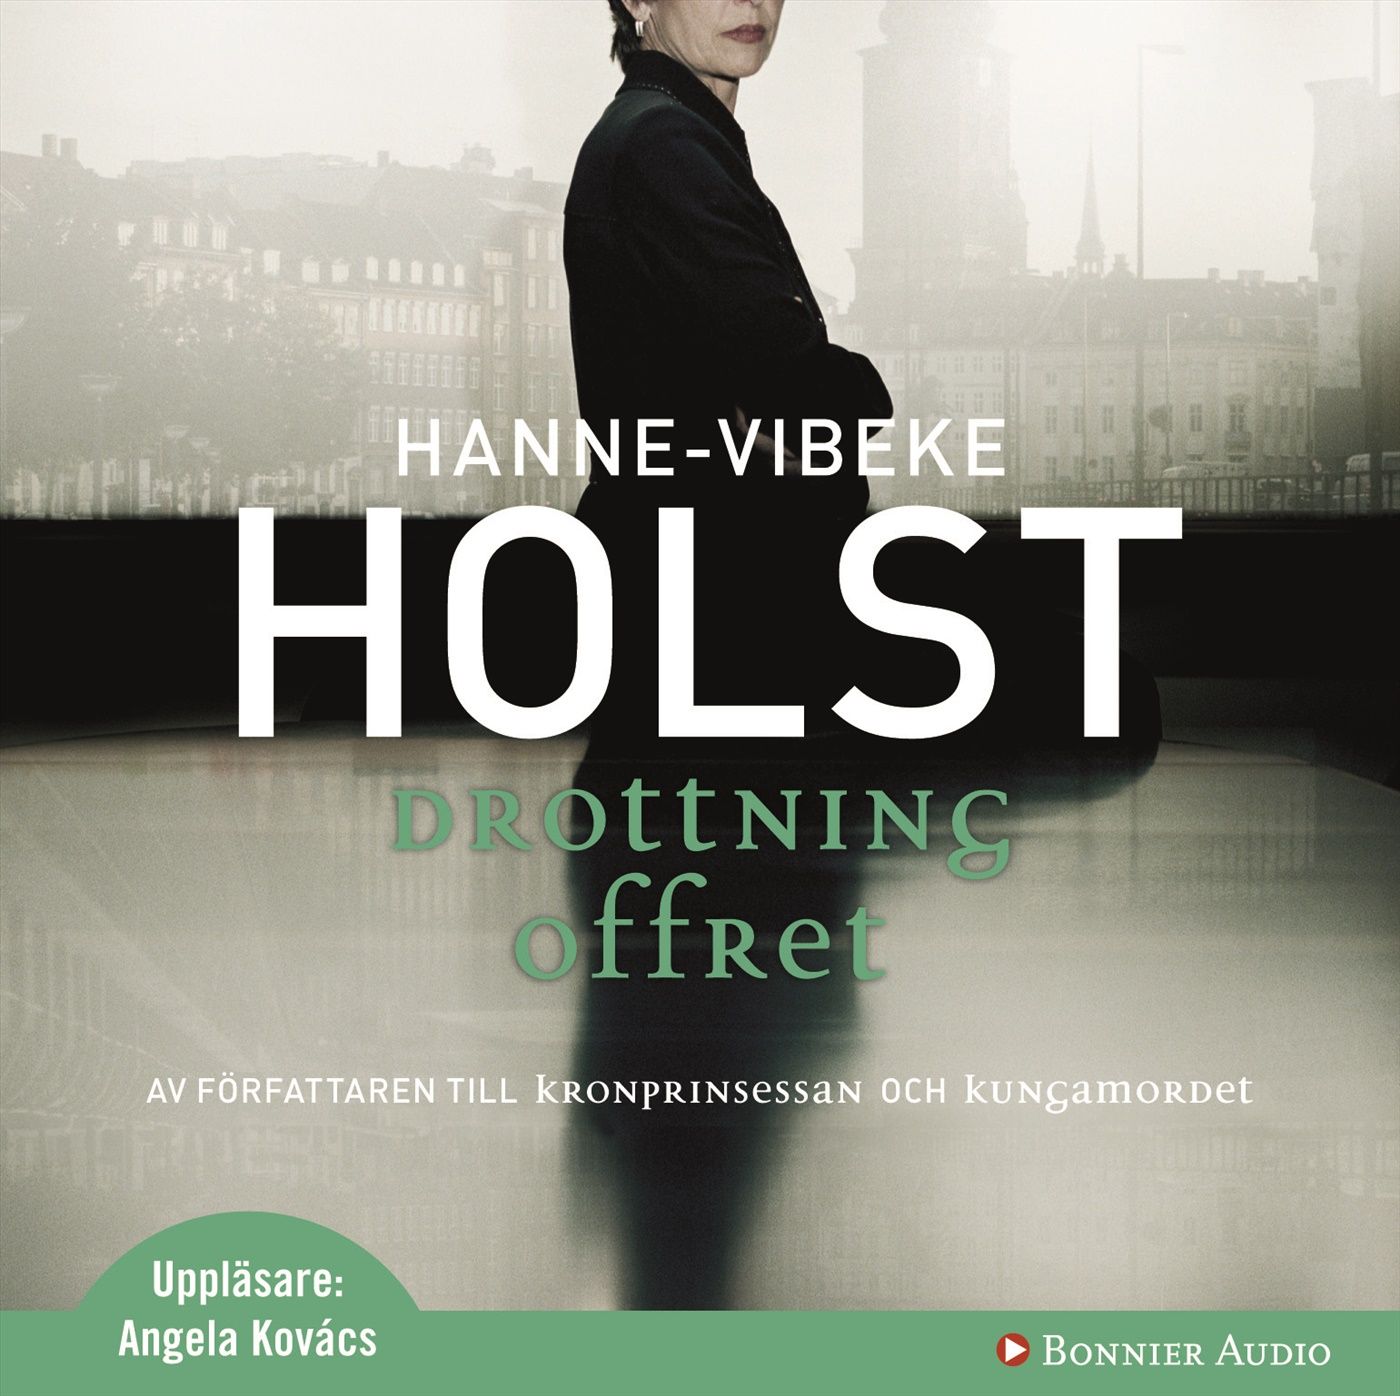 Drottningoffret, audiobook by Hanne-Vibeke Holst